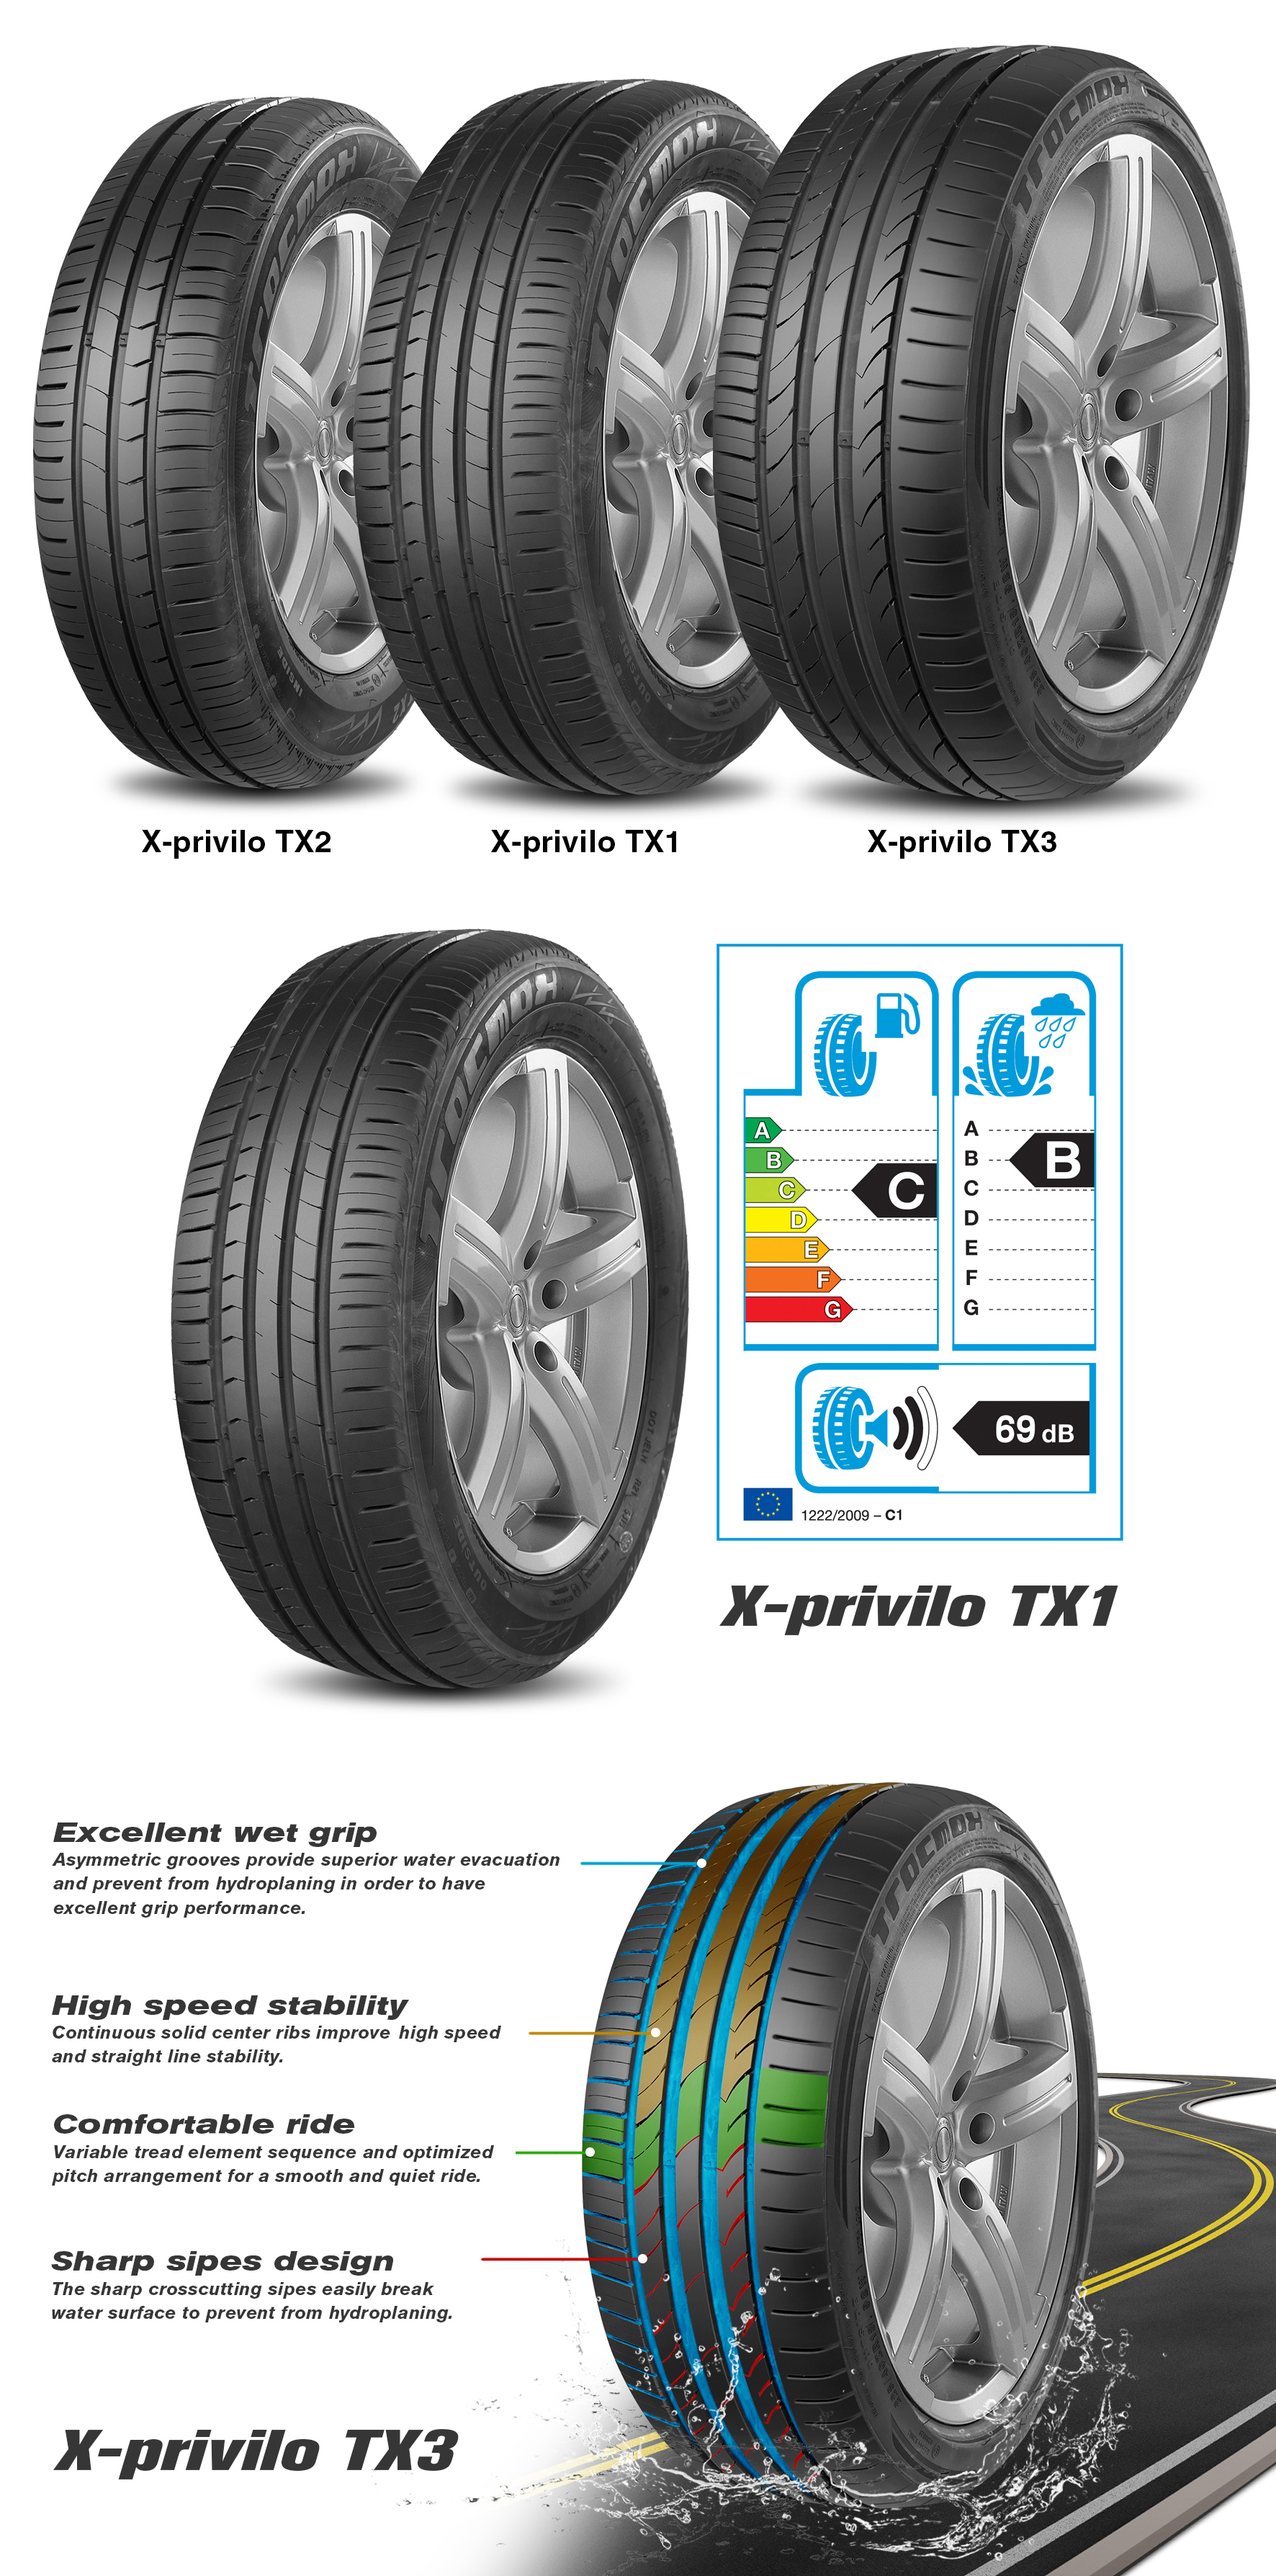 new Tracmax Tyrepress series - X-privilo launches